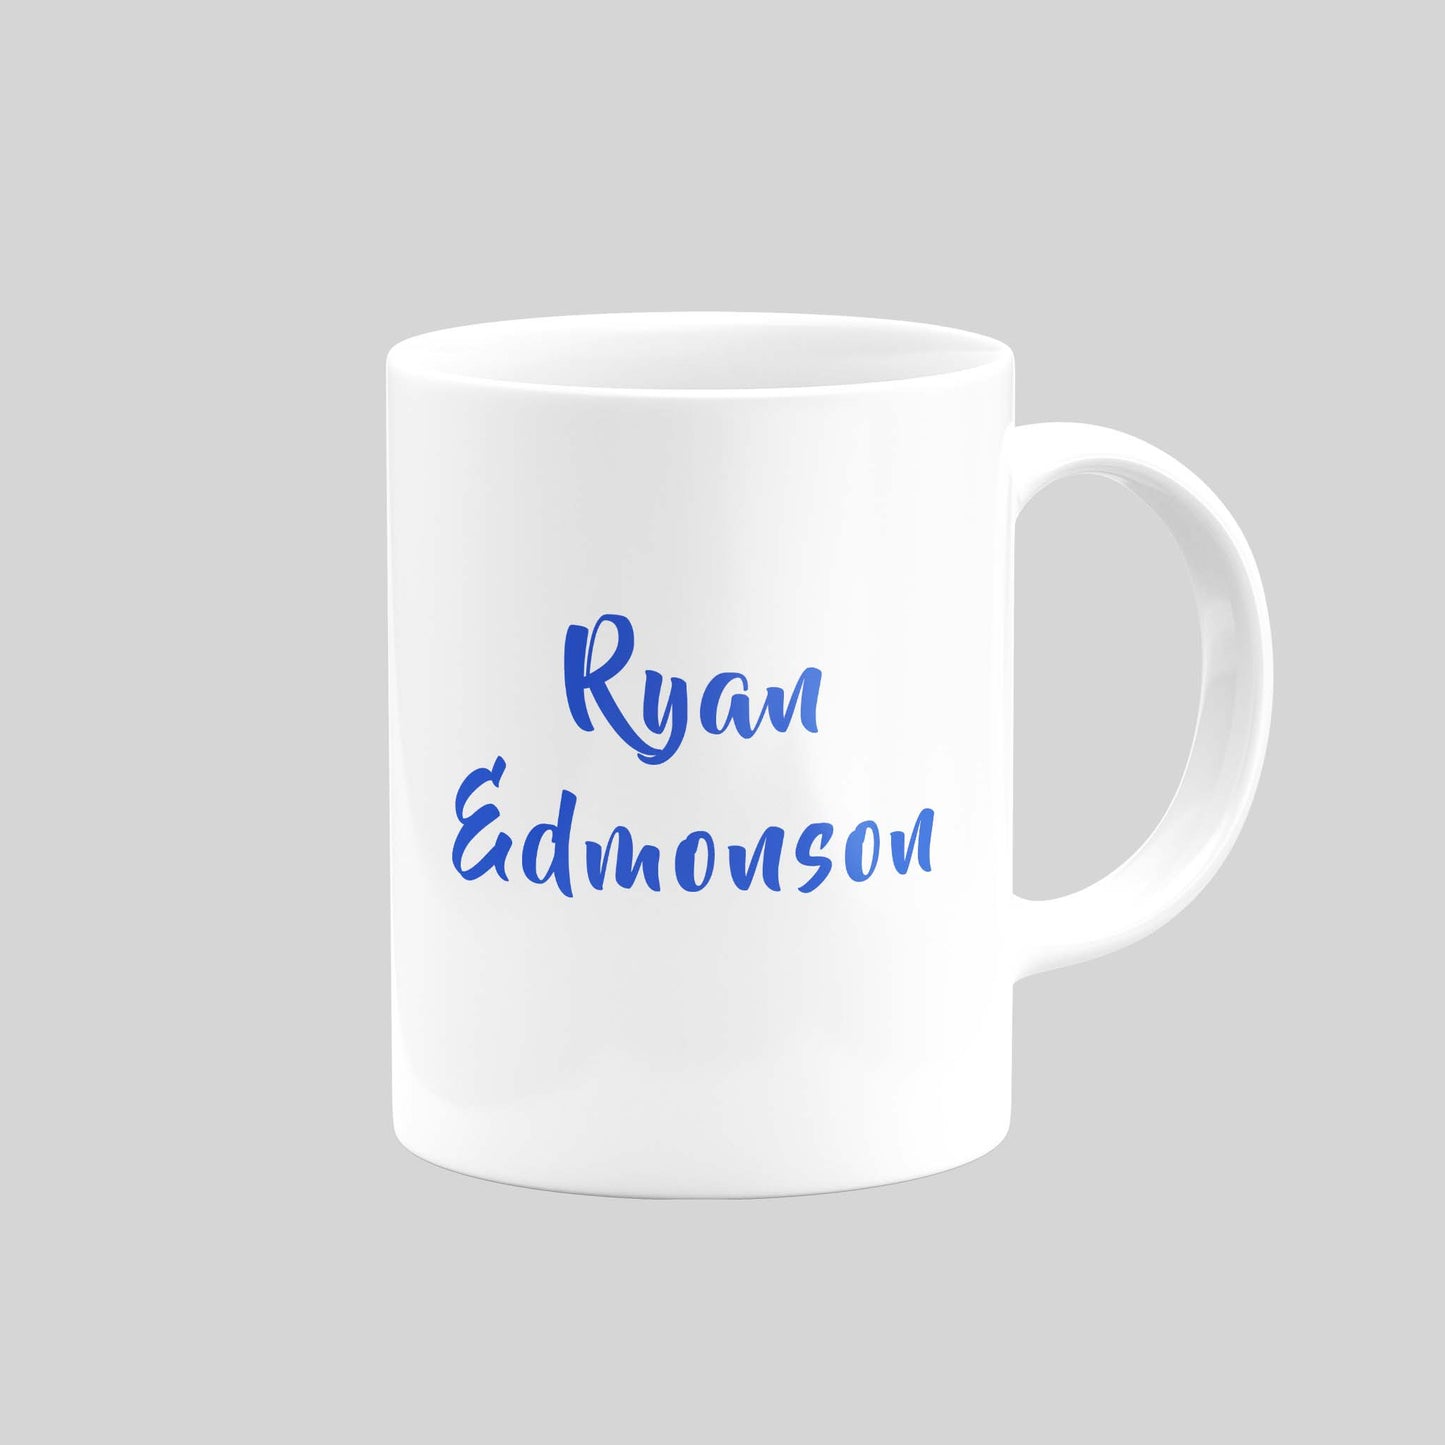 Ryan Edmonson Mug